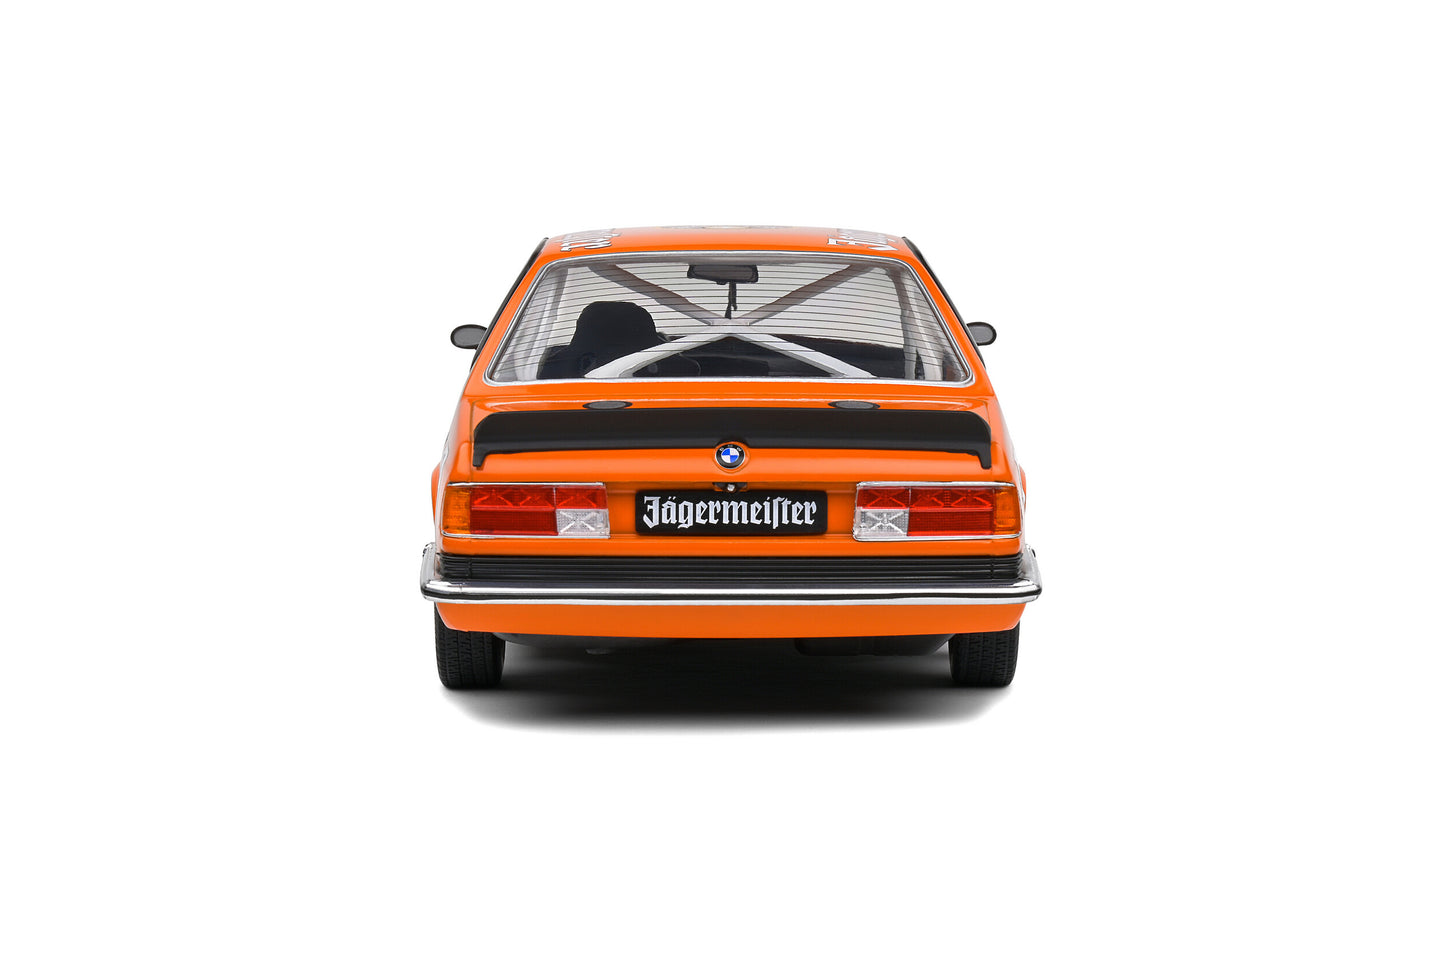 Solido 1984 BMW 635 CSI (E24) Jagermeister Orange #6 H.Stuck European Touring Car Championship 1:18